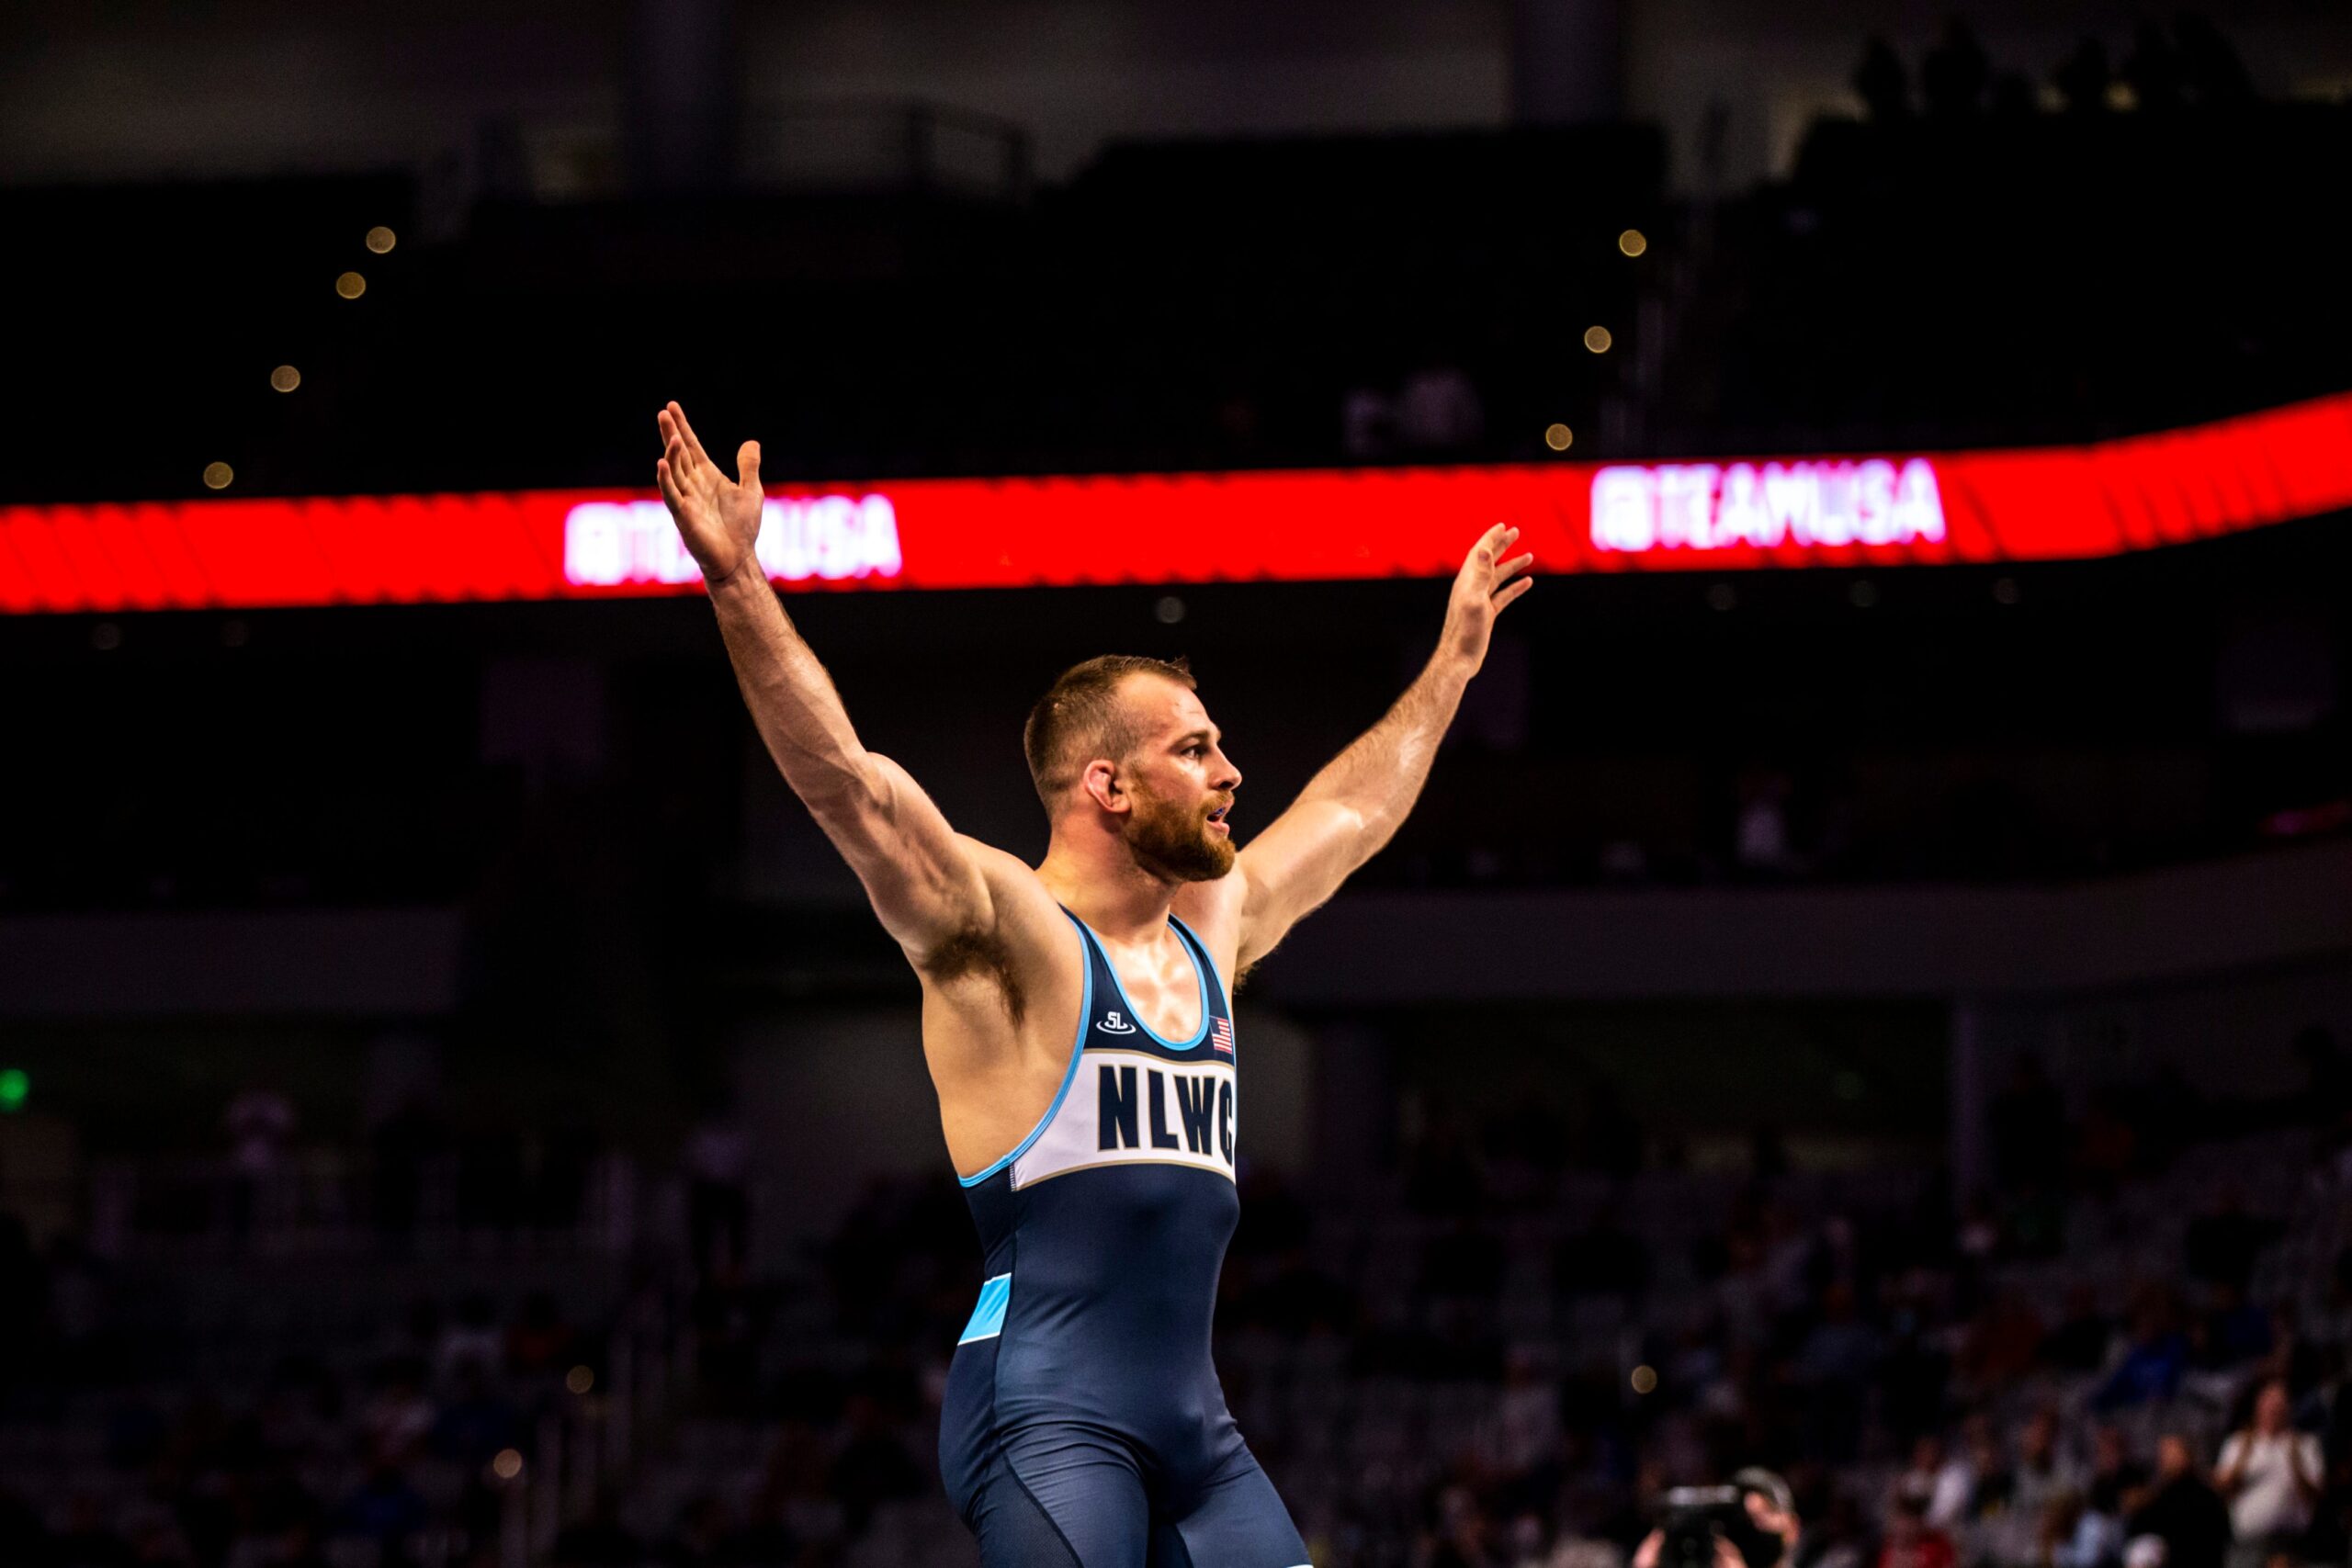 Penn State wrestling, David Taylor, Olympic Team Trials, Nike